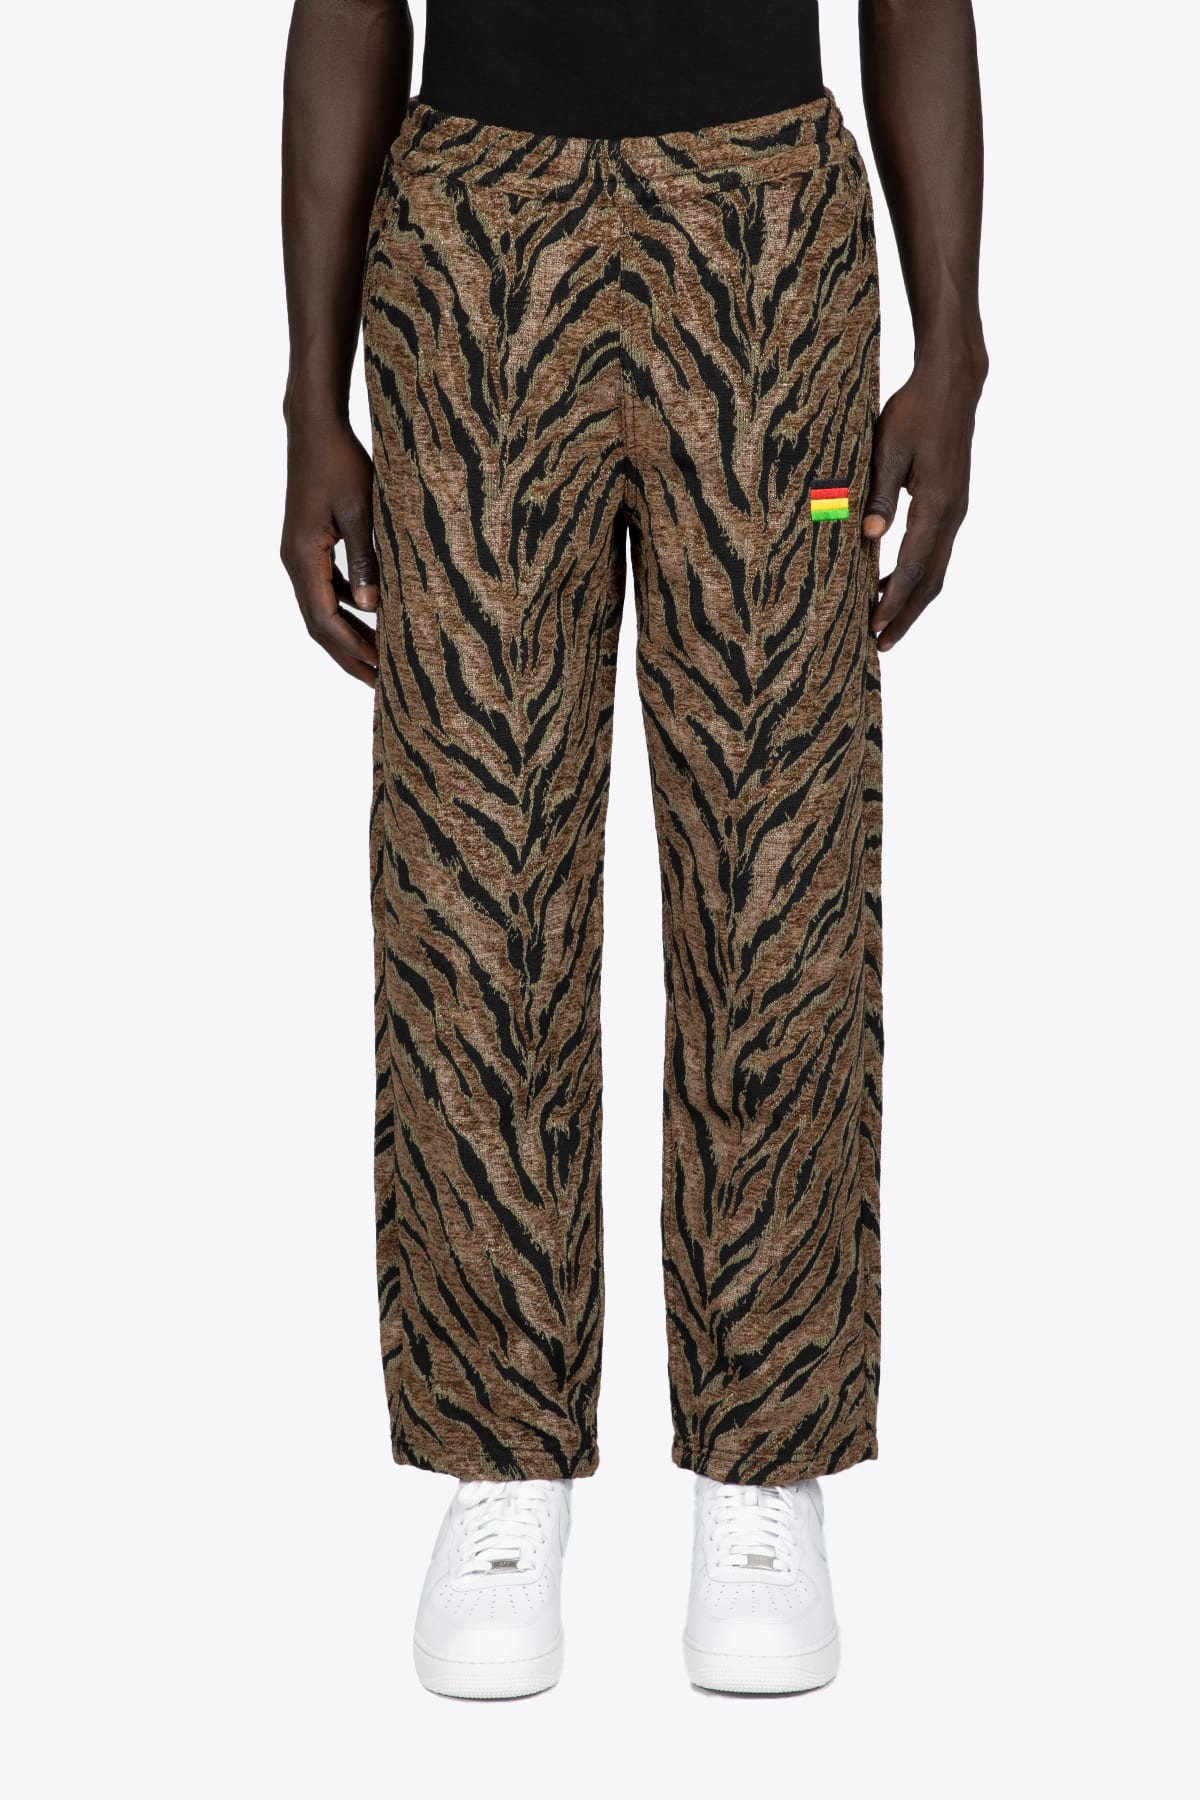 Pleasures Jungle Pant Tiger camouflage printed pant